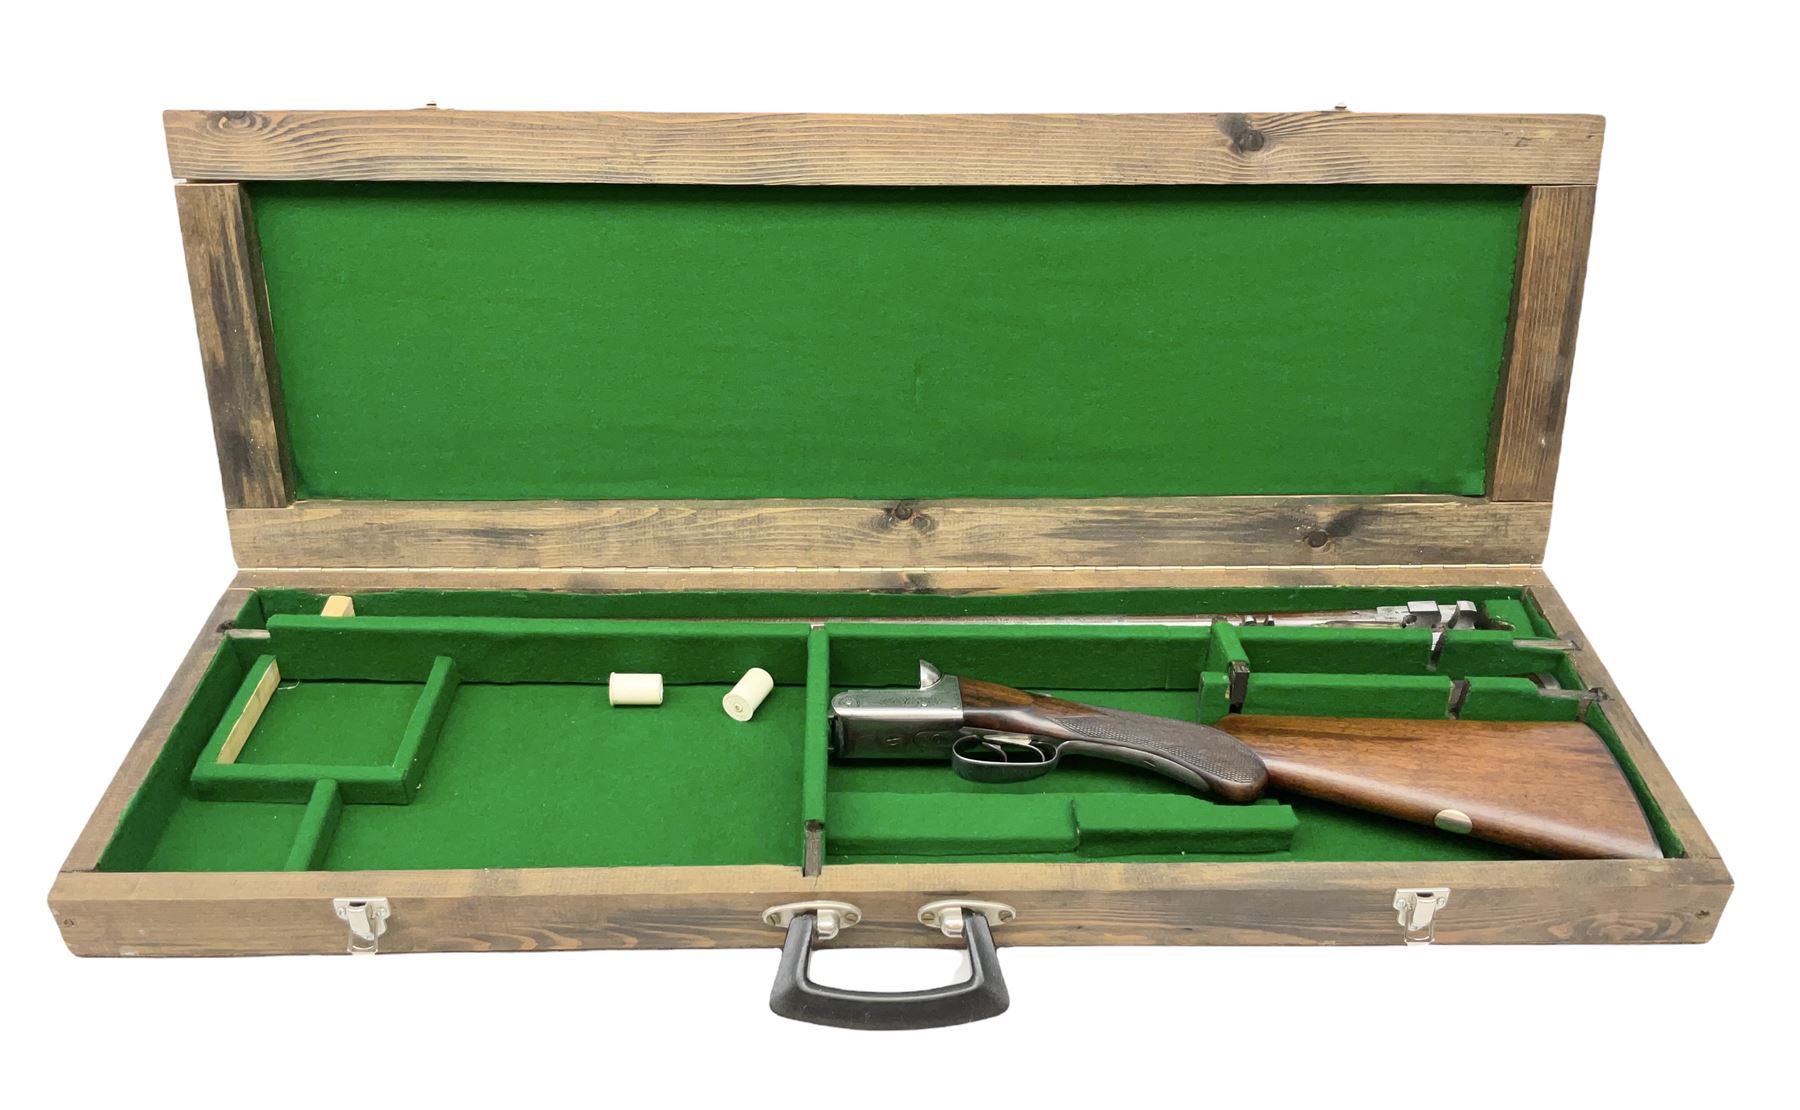 Midland Gun Company Birmingham & London 12-bore side-by-side box-lock non-ejector double barrel shot